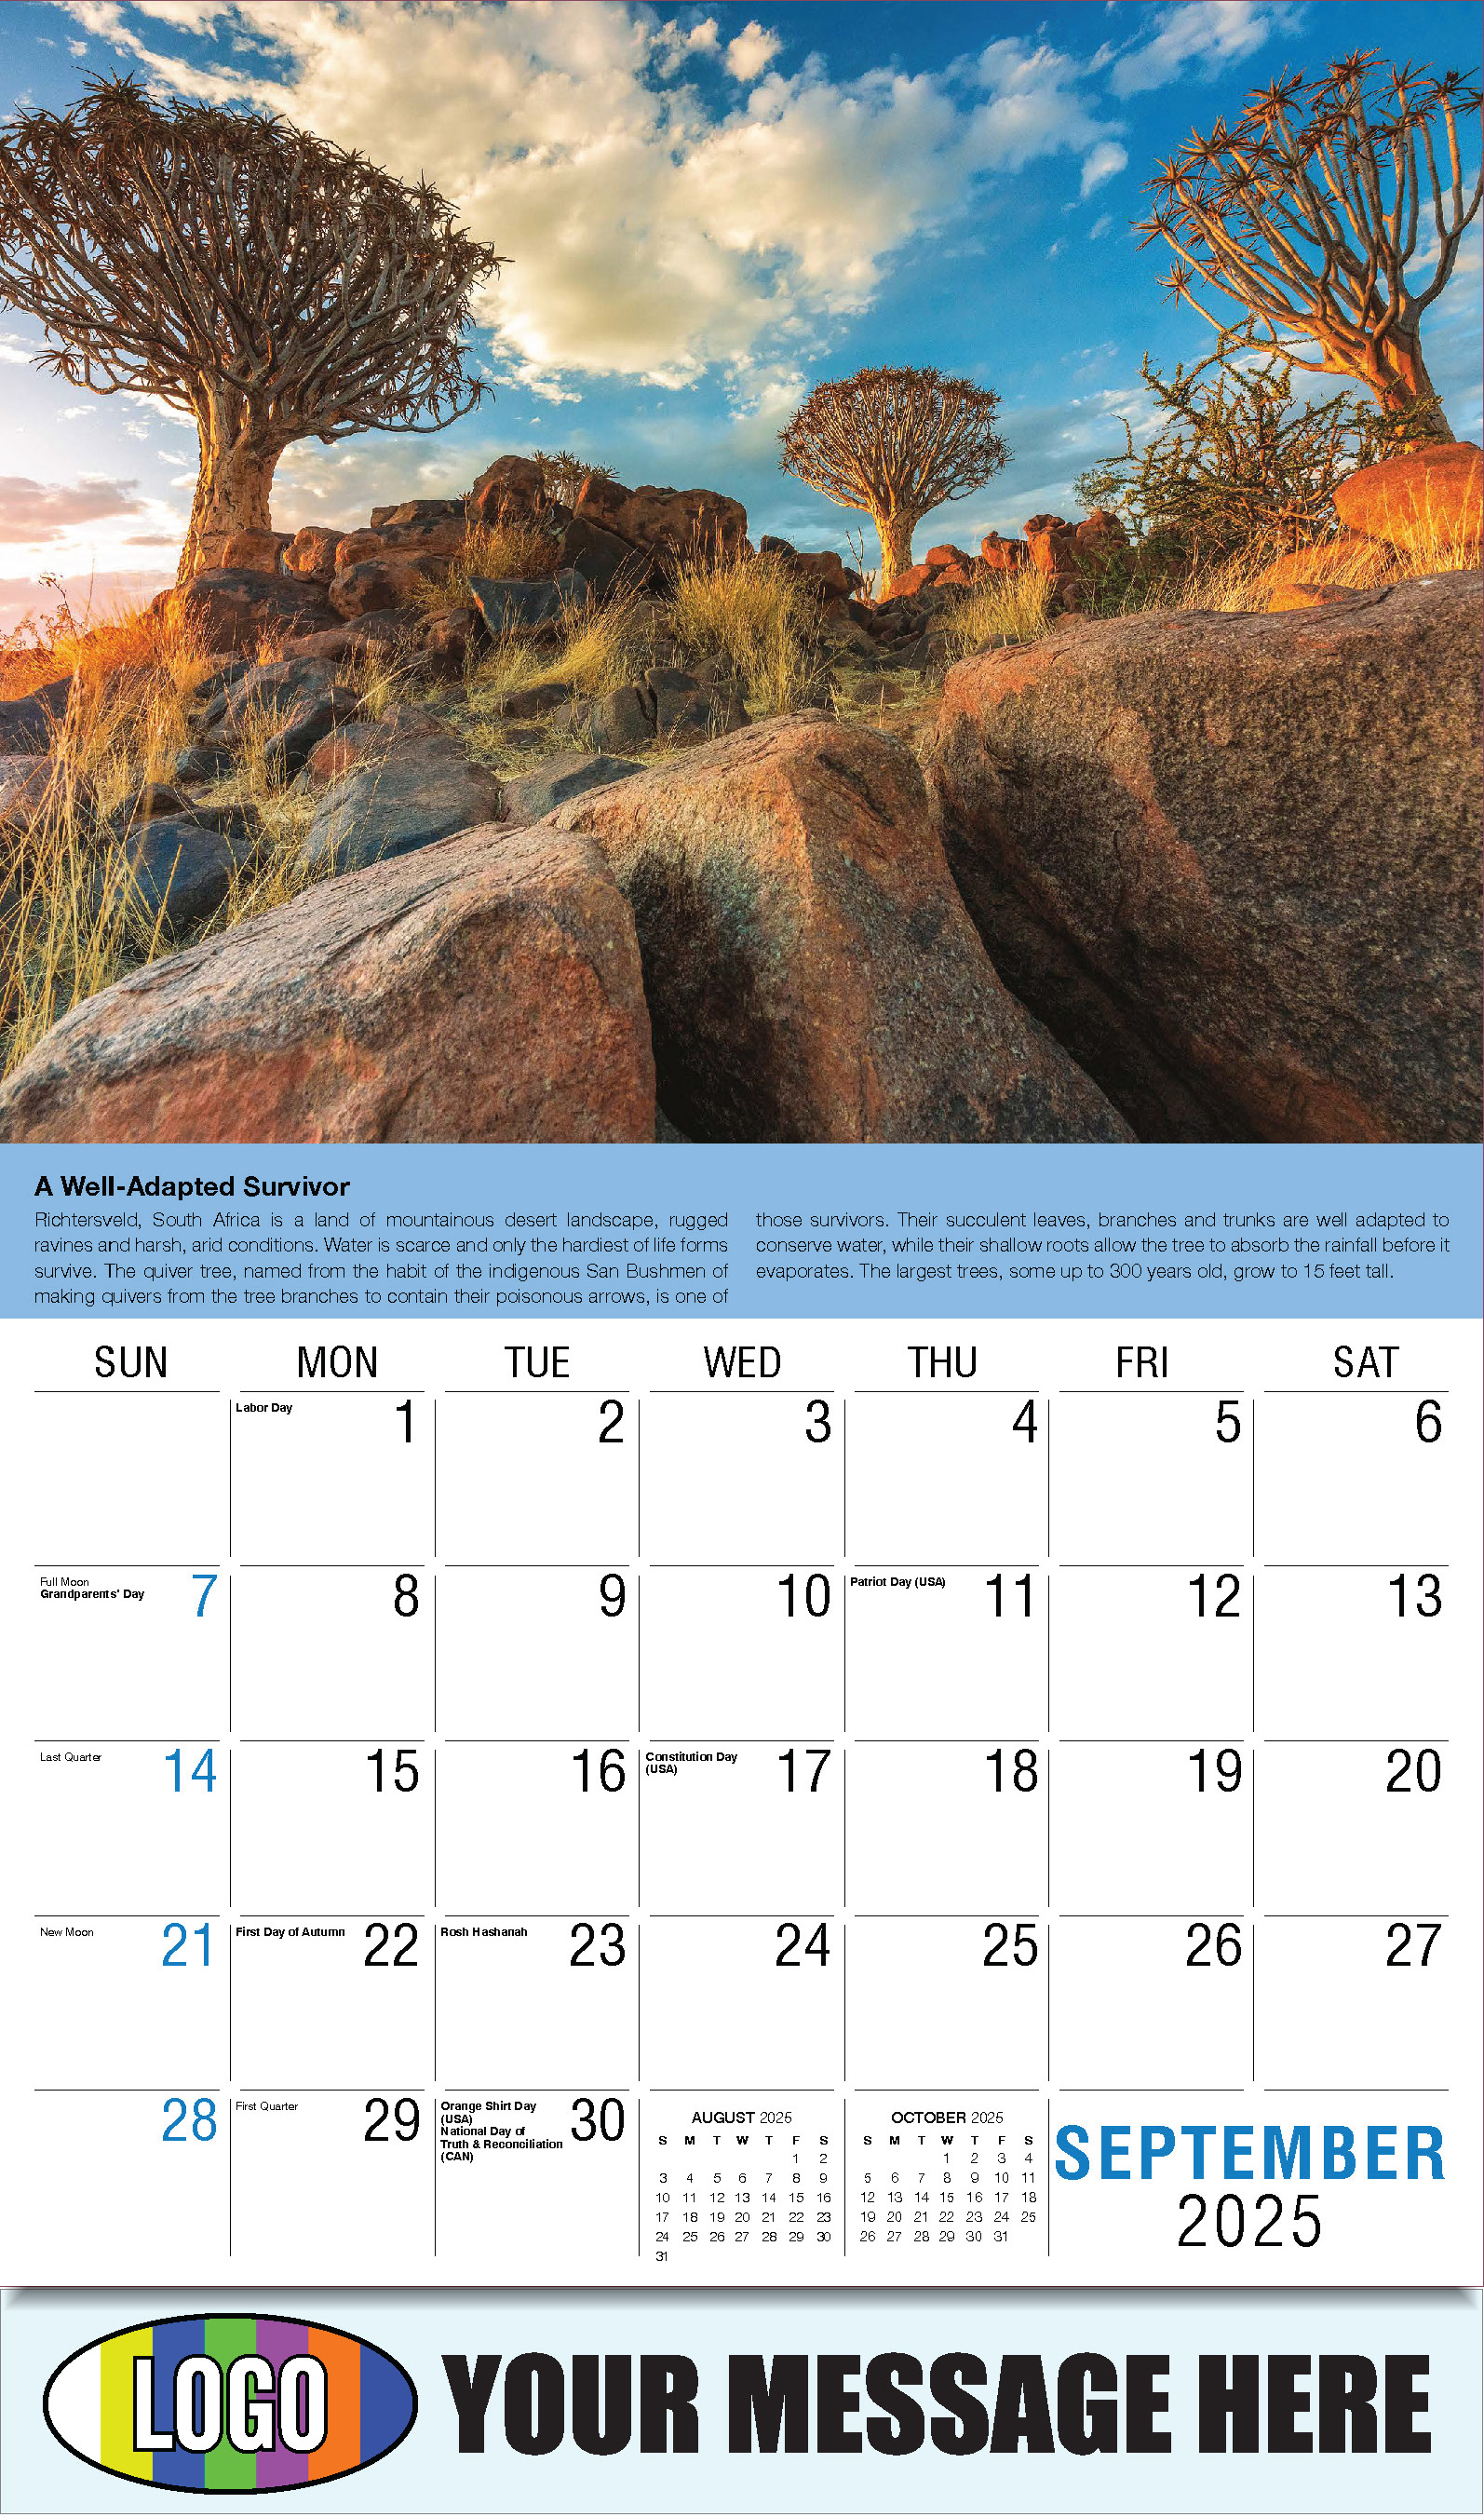 Planet Earth 2025 Business Promotional Wall Calendar - September